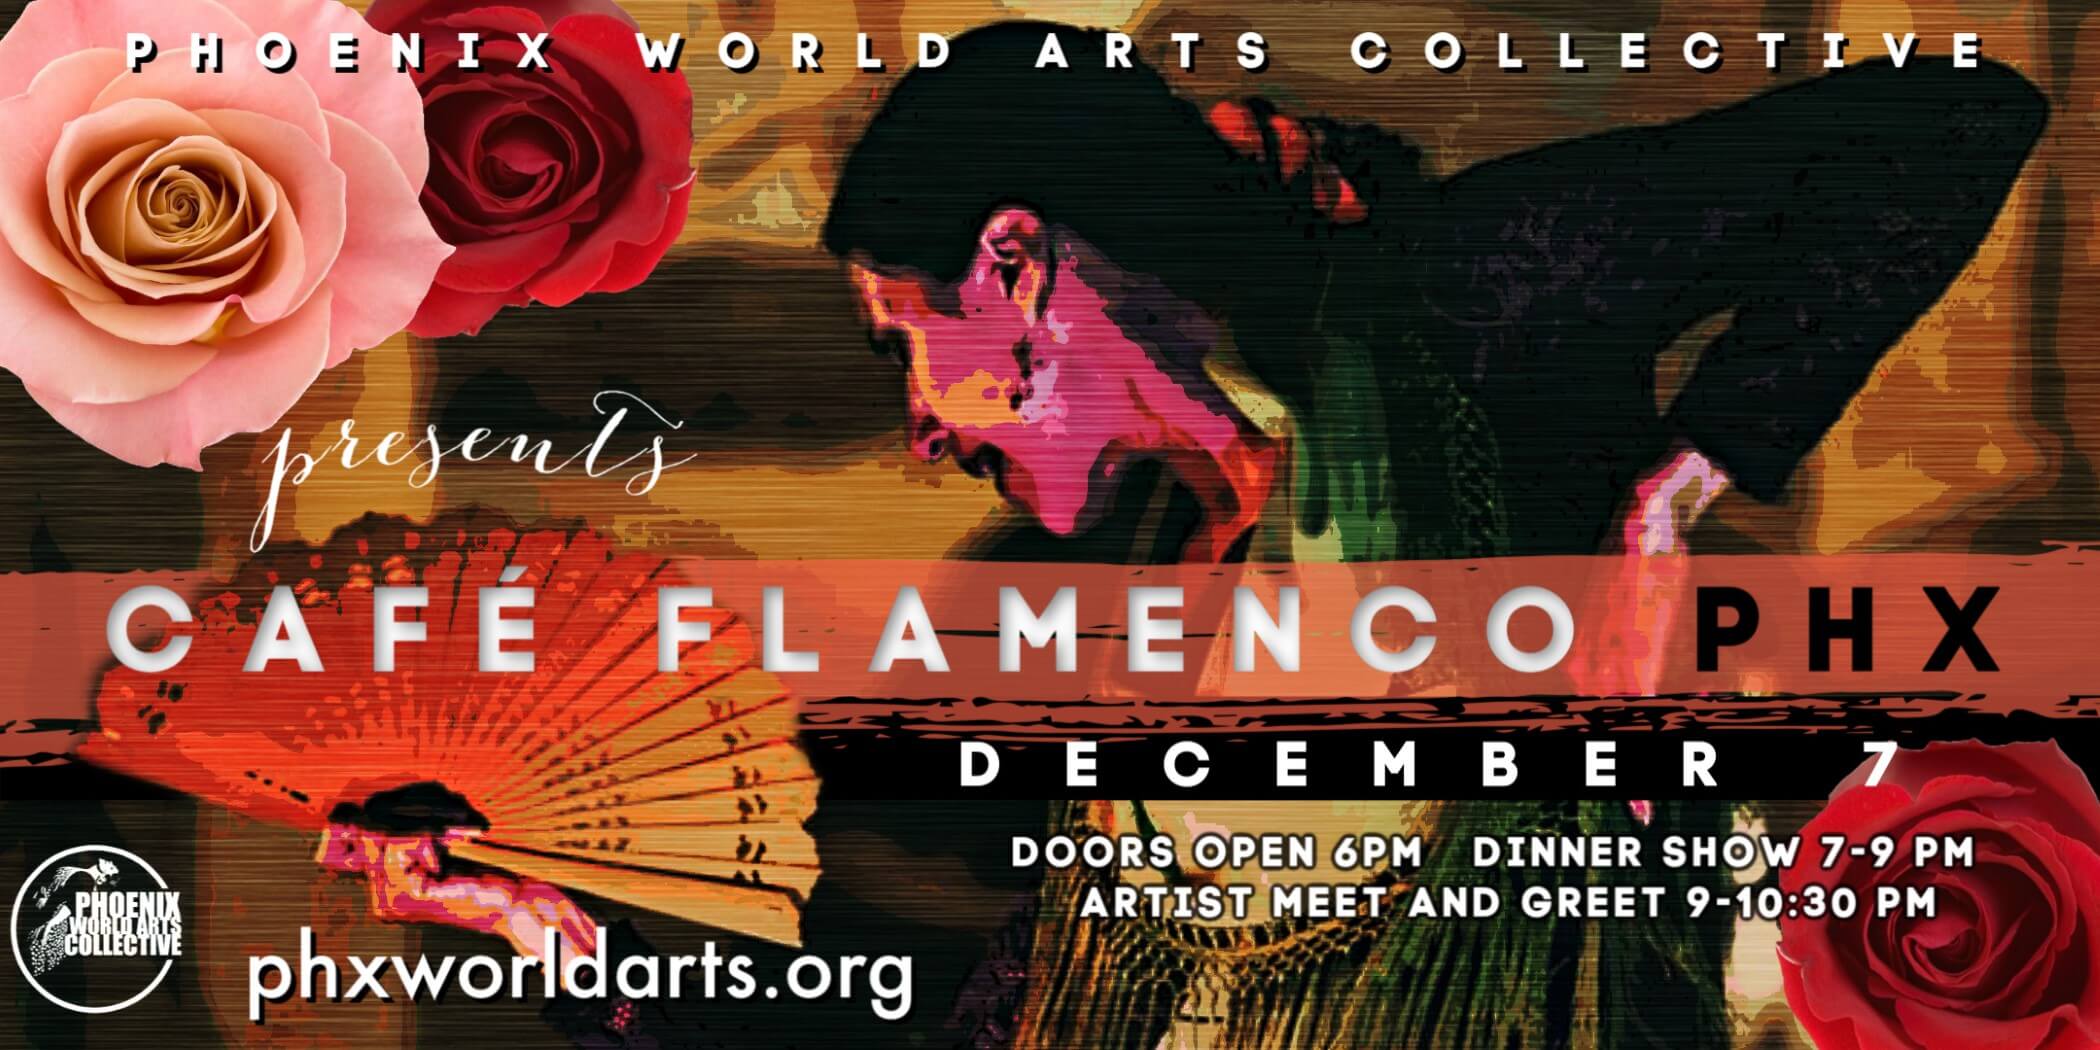 flamenco shows phoenix az